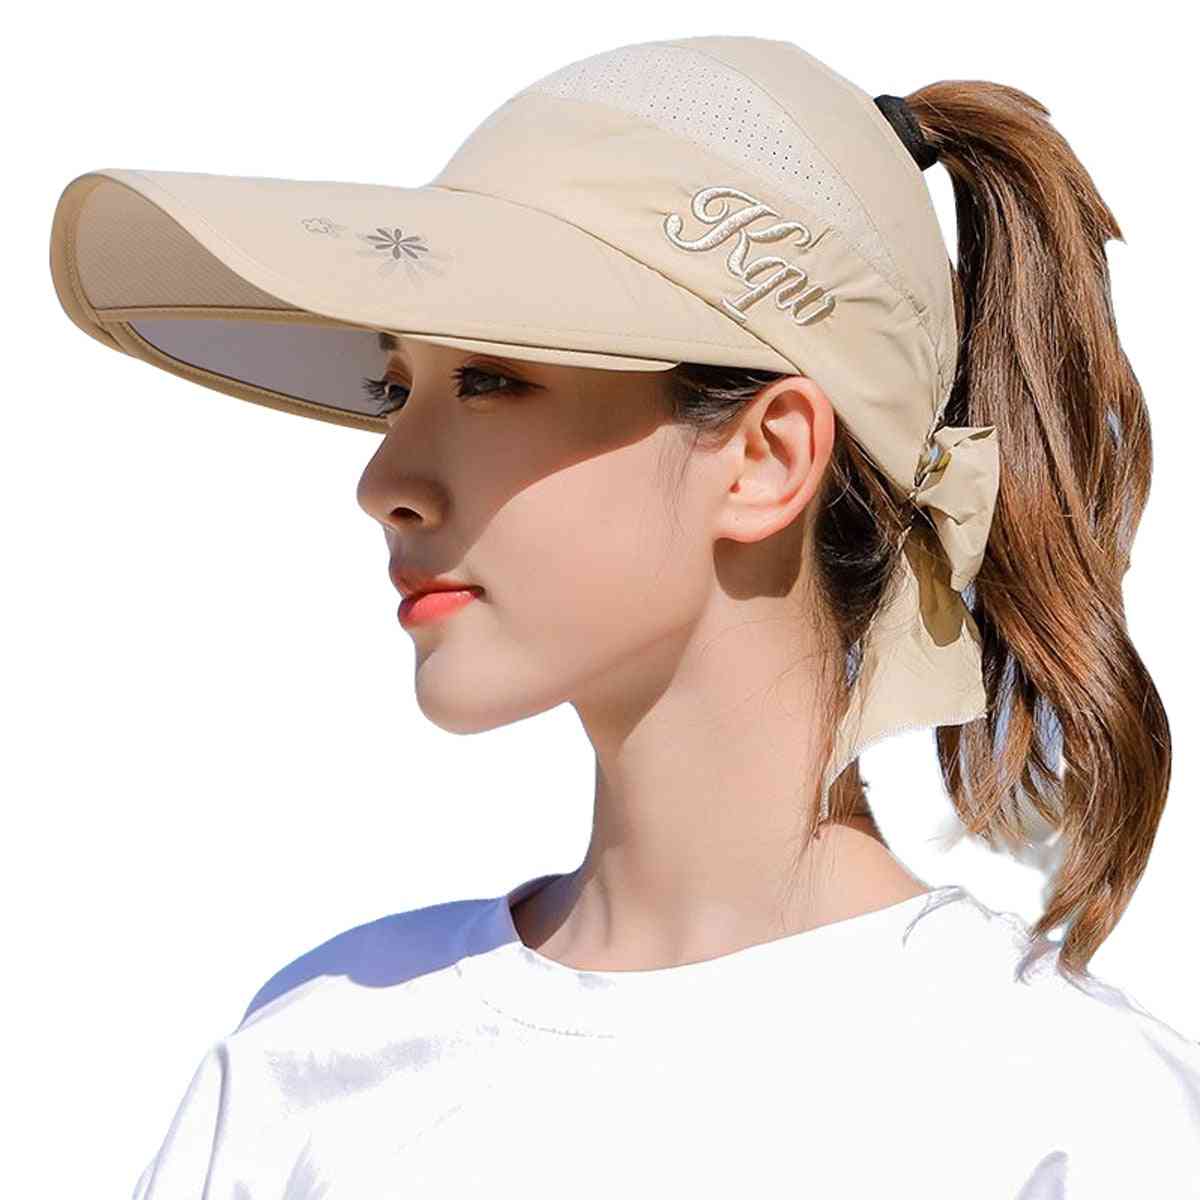 Adjustable Outdoor Protective Sun Hat